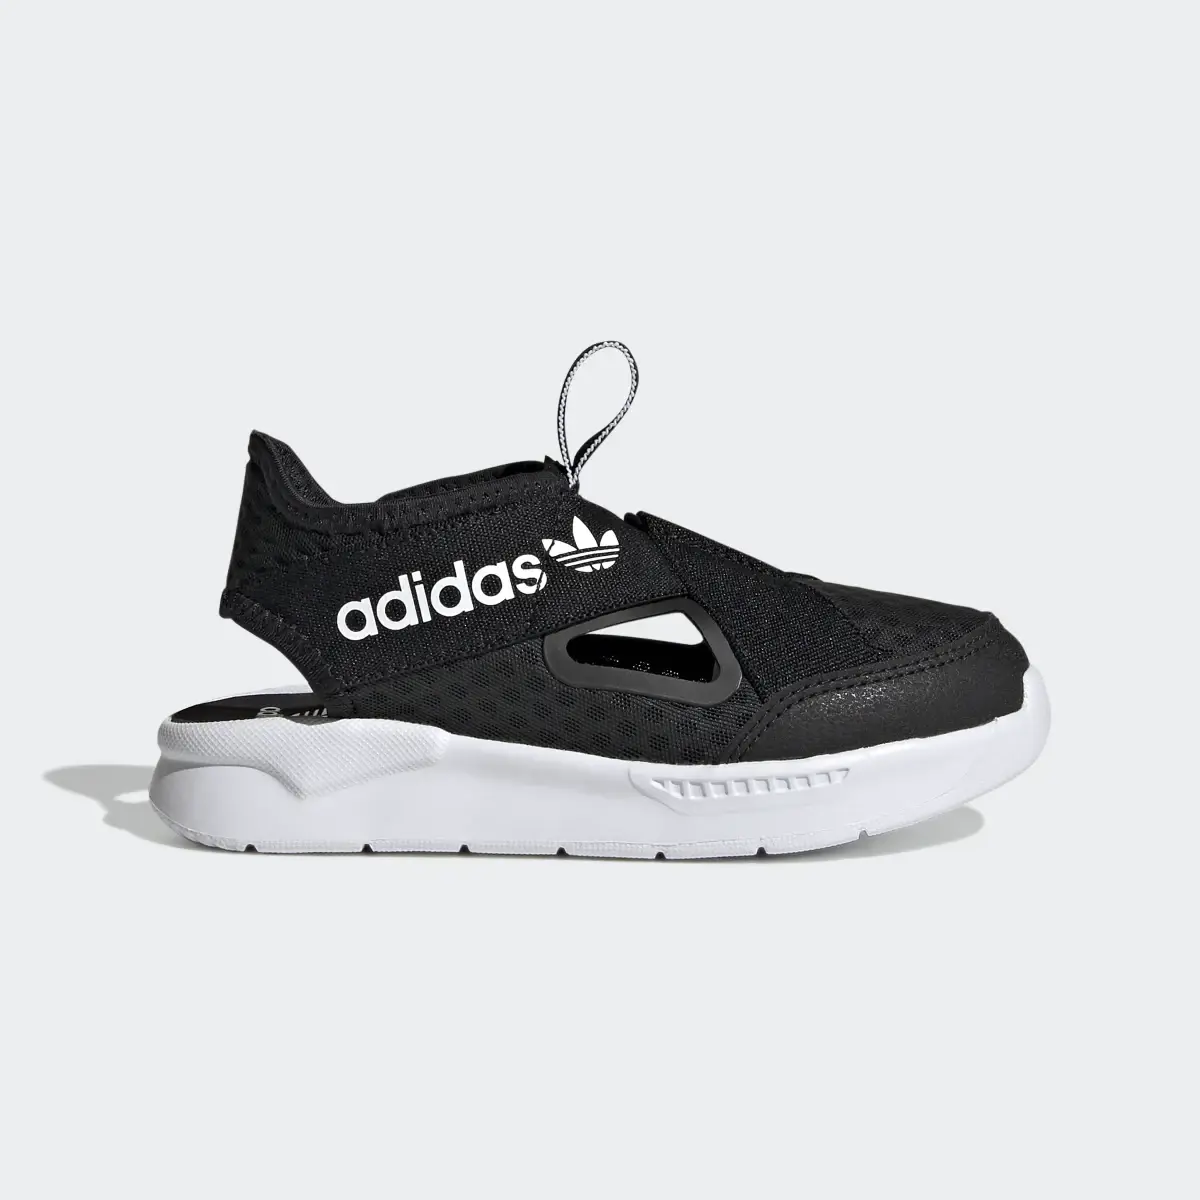 Adidas 360 Sandals. 2